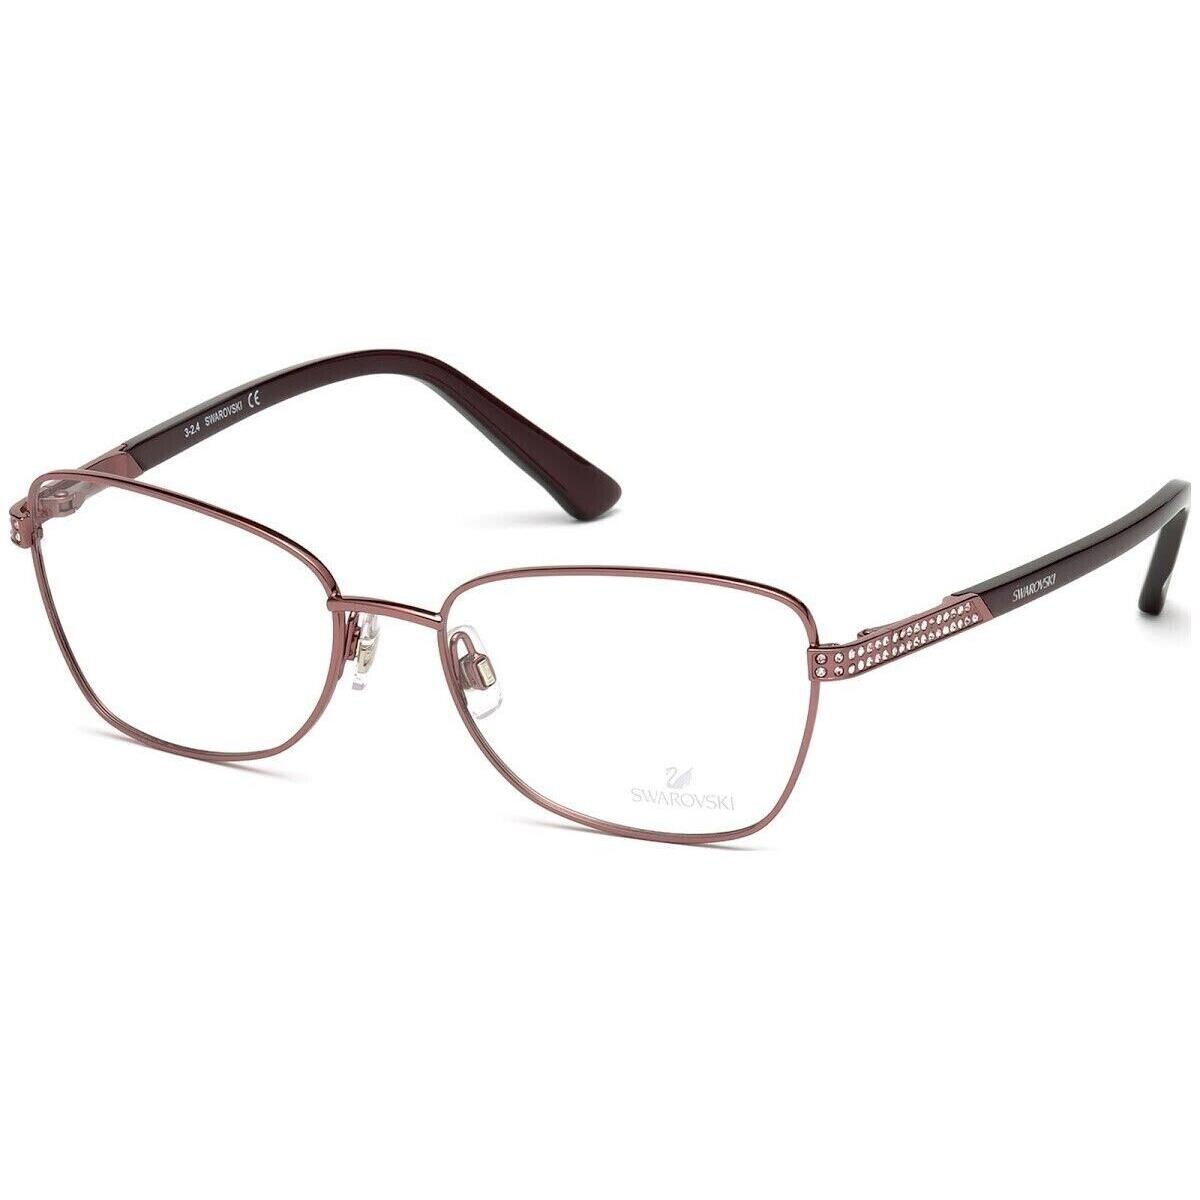 Swarovski Fever SW 5150 066 Rose Gold Metal Butterfly Style Eyeglasses 53-16-135